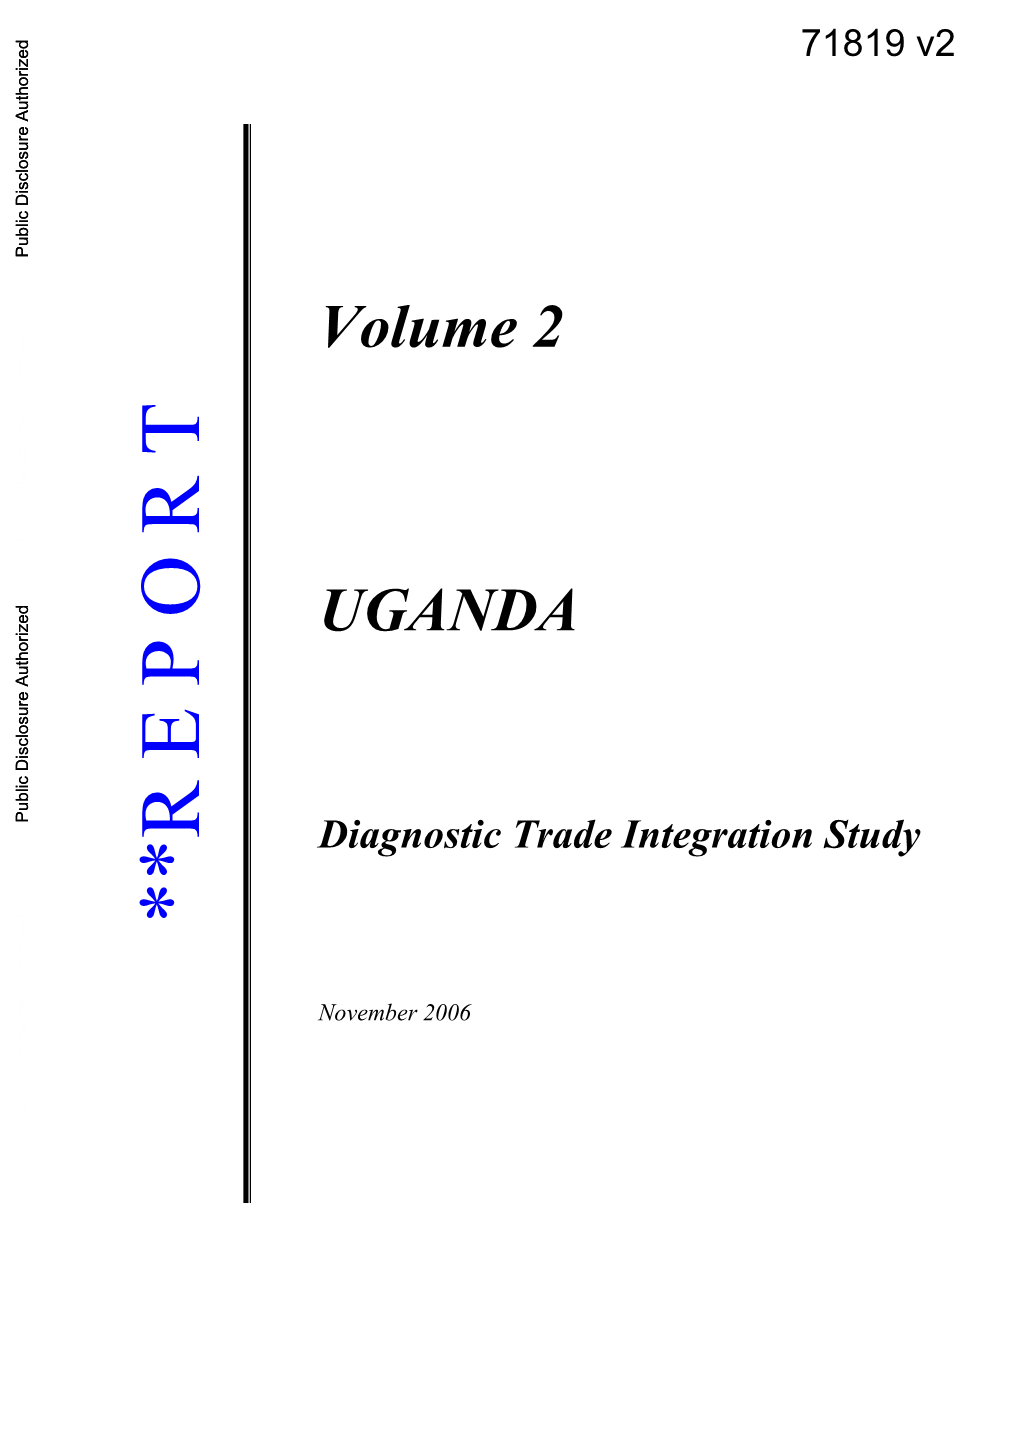 Volume 2 UGANDA Diagnostic Trade Integration